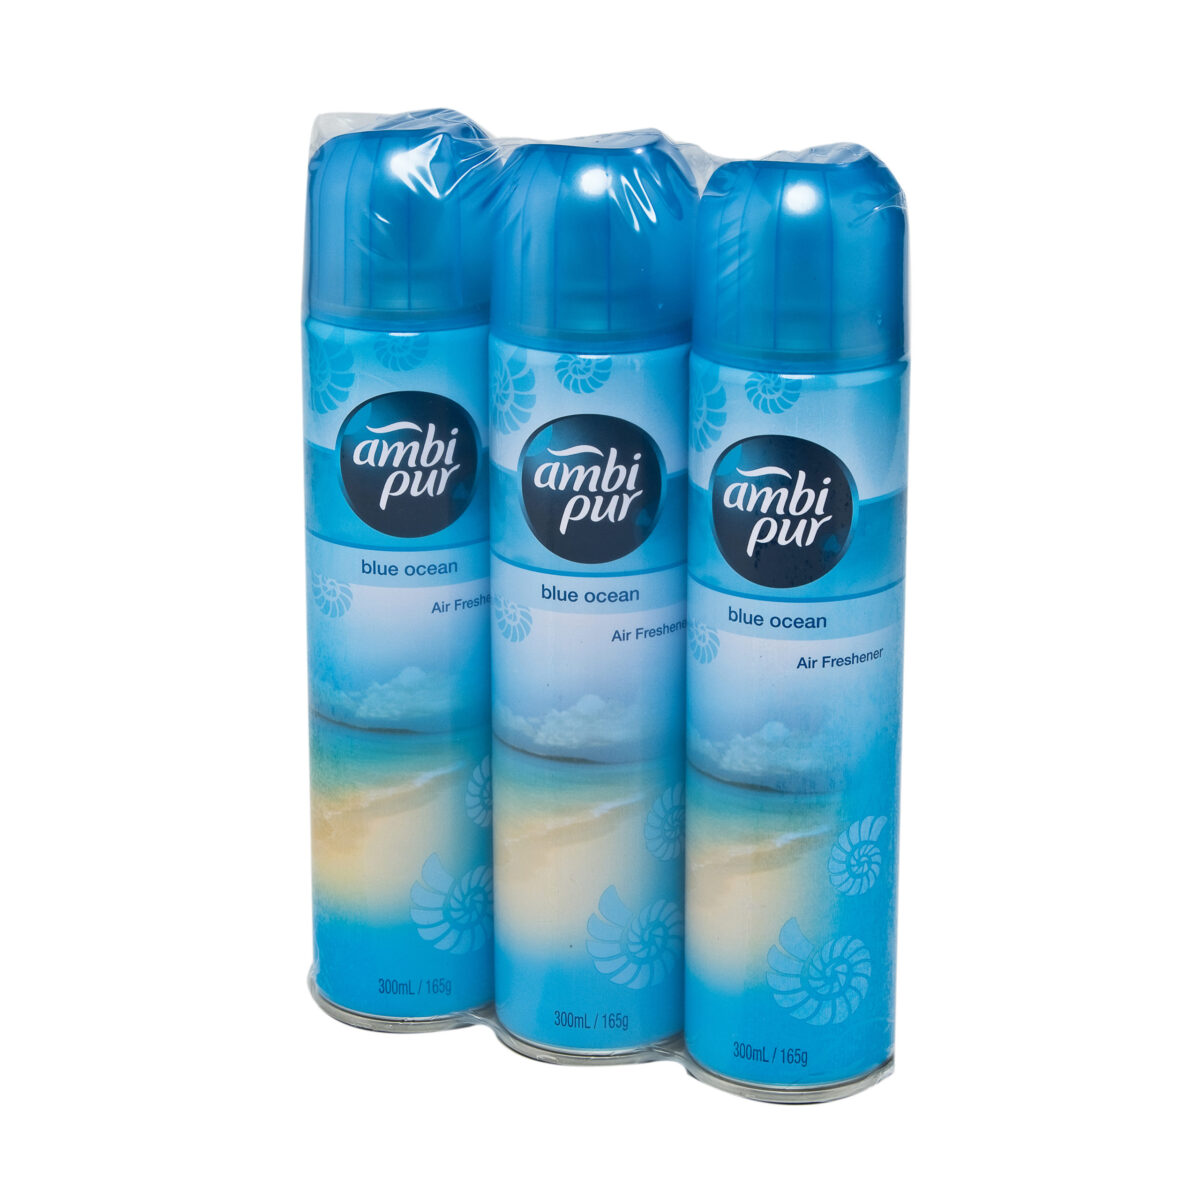 Ambi Pur Air Freshener Spray Blue Ocean 300ml.×Pack3 แอมบิเพอร์ สเปรย์ปรับอากาศ บลูโอเชี่ยน 300มล.×แพ็ค3 scaled 1 1